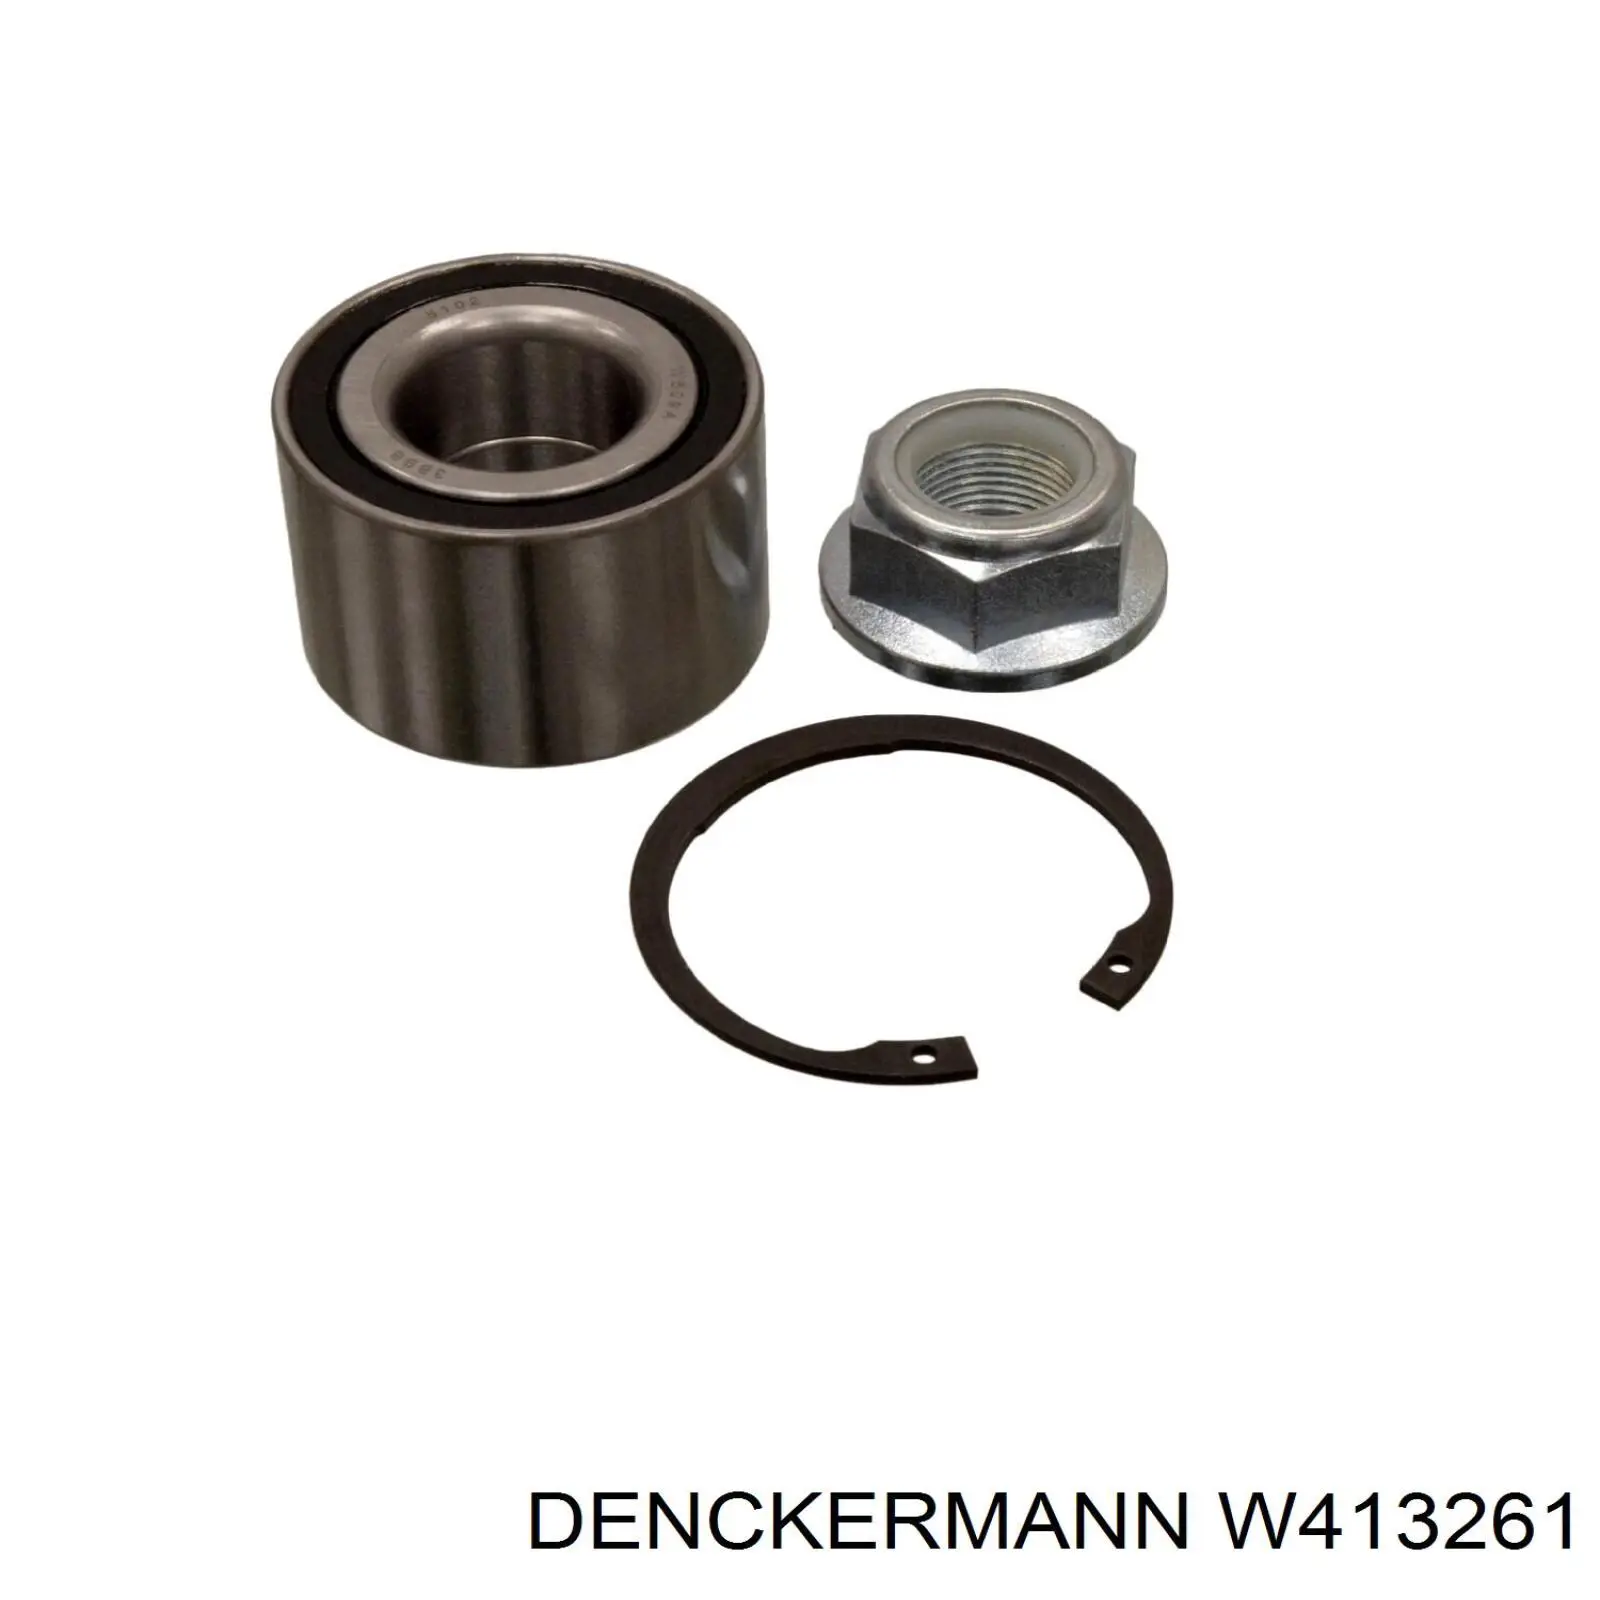 W413261 Denckermann cojinete de rueda trasero